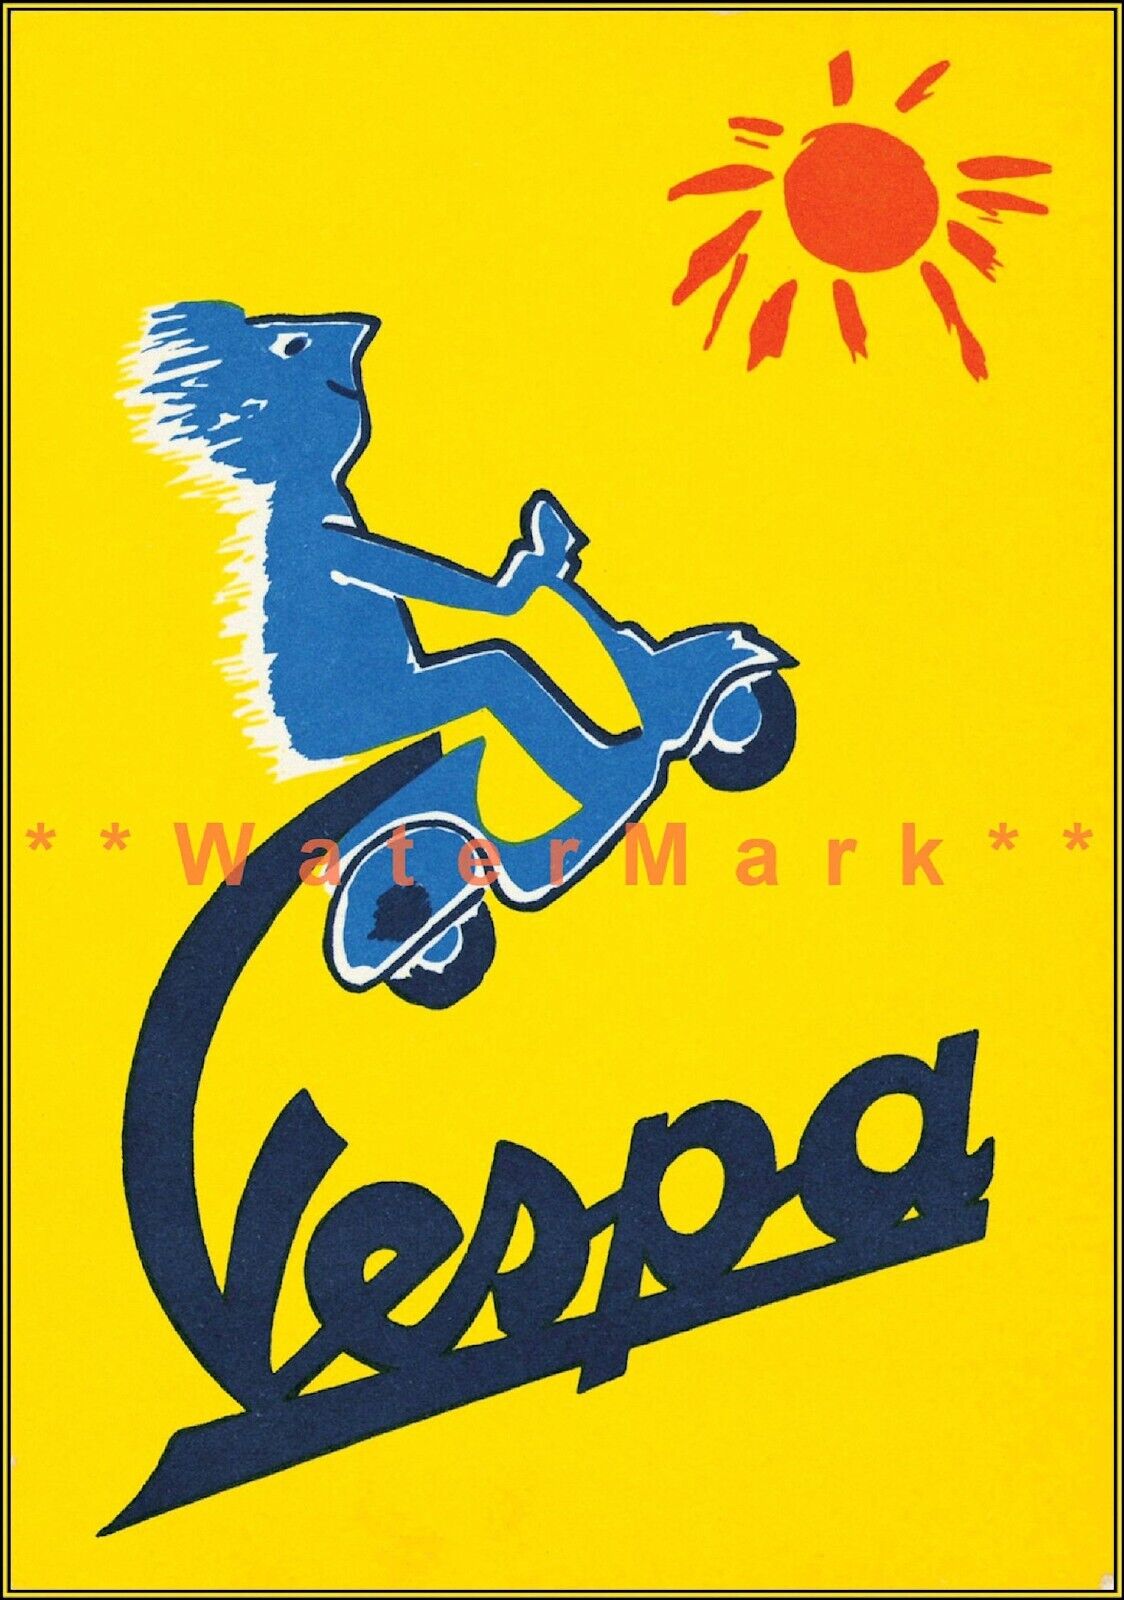 Vespa 1955 Italian Classic Motor Scooter Vintage Poster Print Retro Style Art